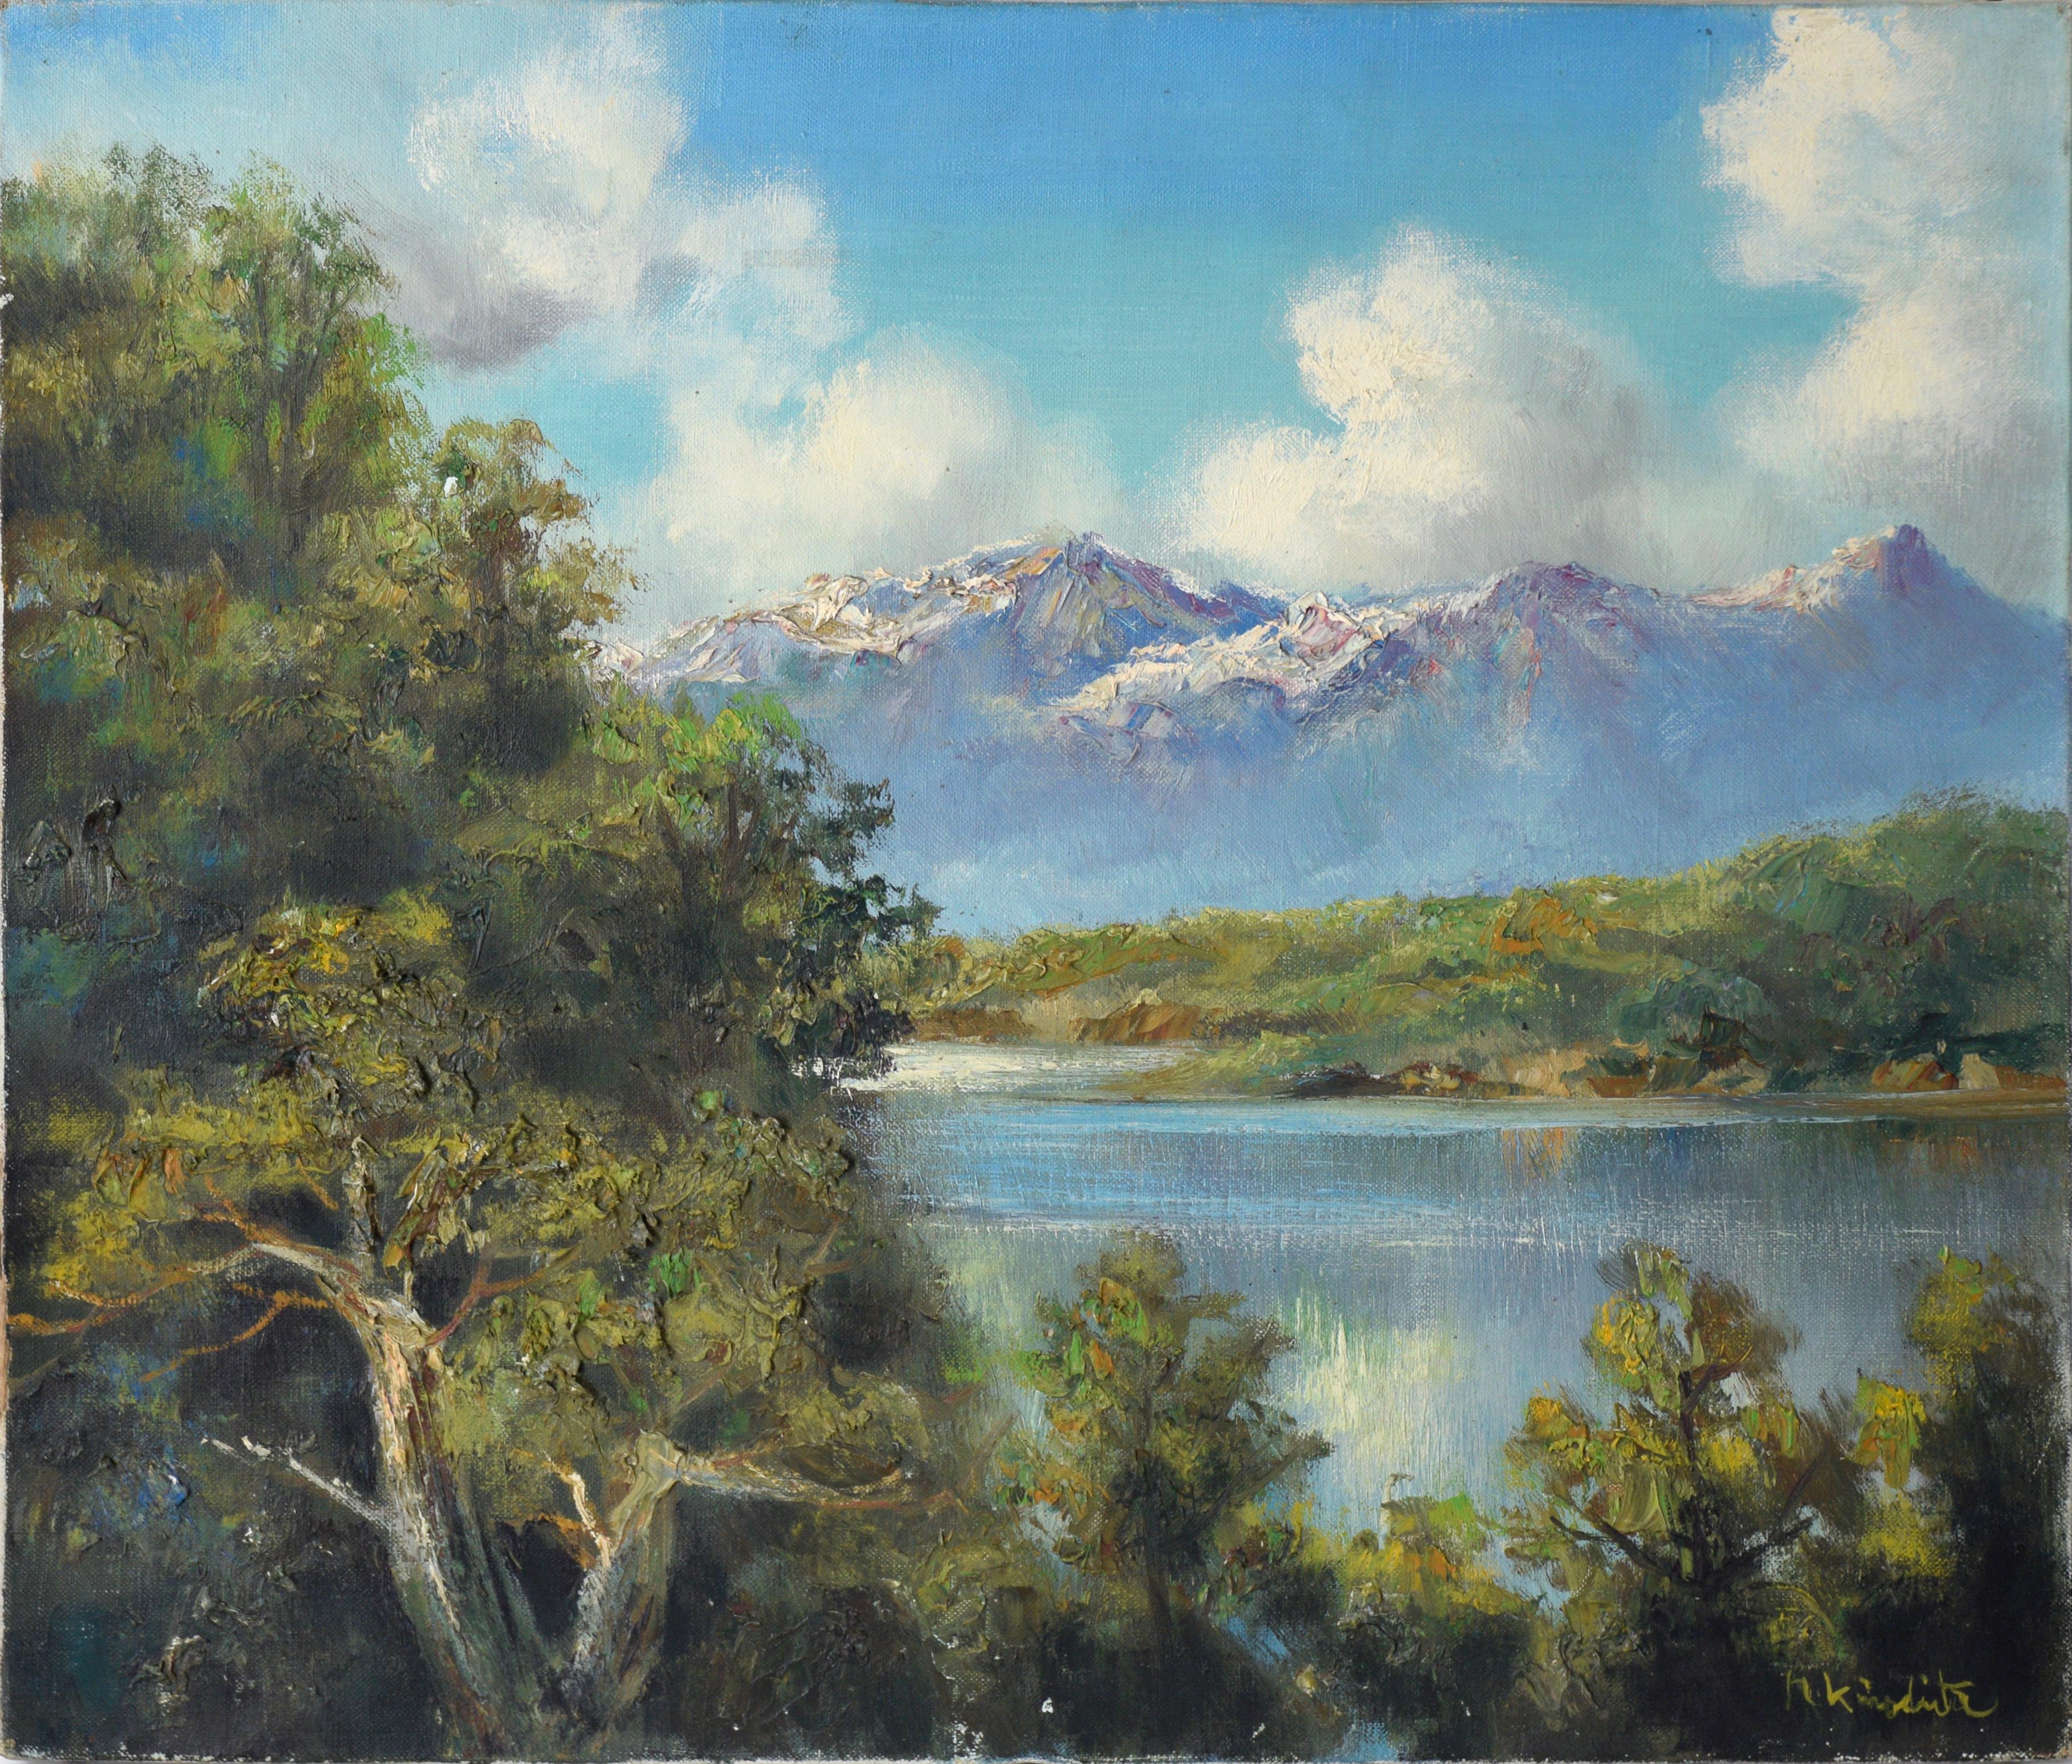 Masao Kinoshita Landscape Painting - Mountain Lake Landscape in Oil on Canvas